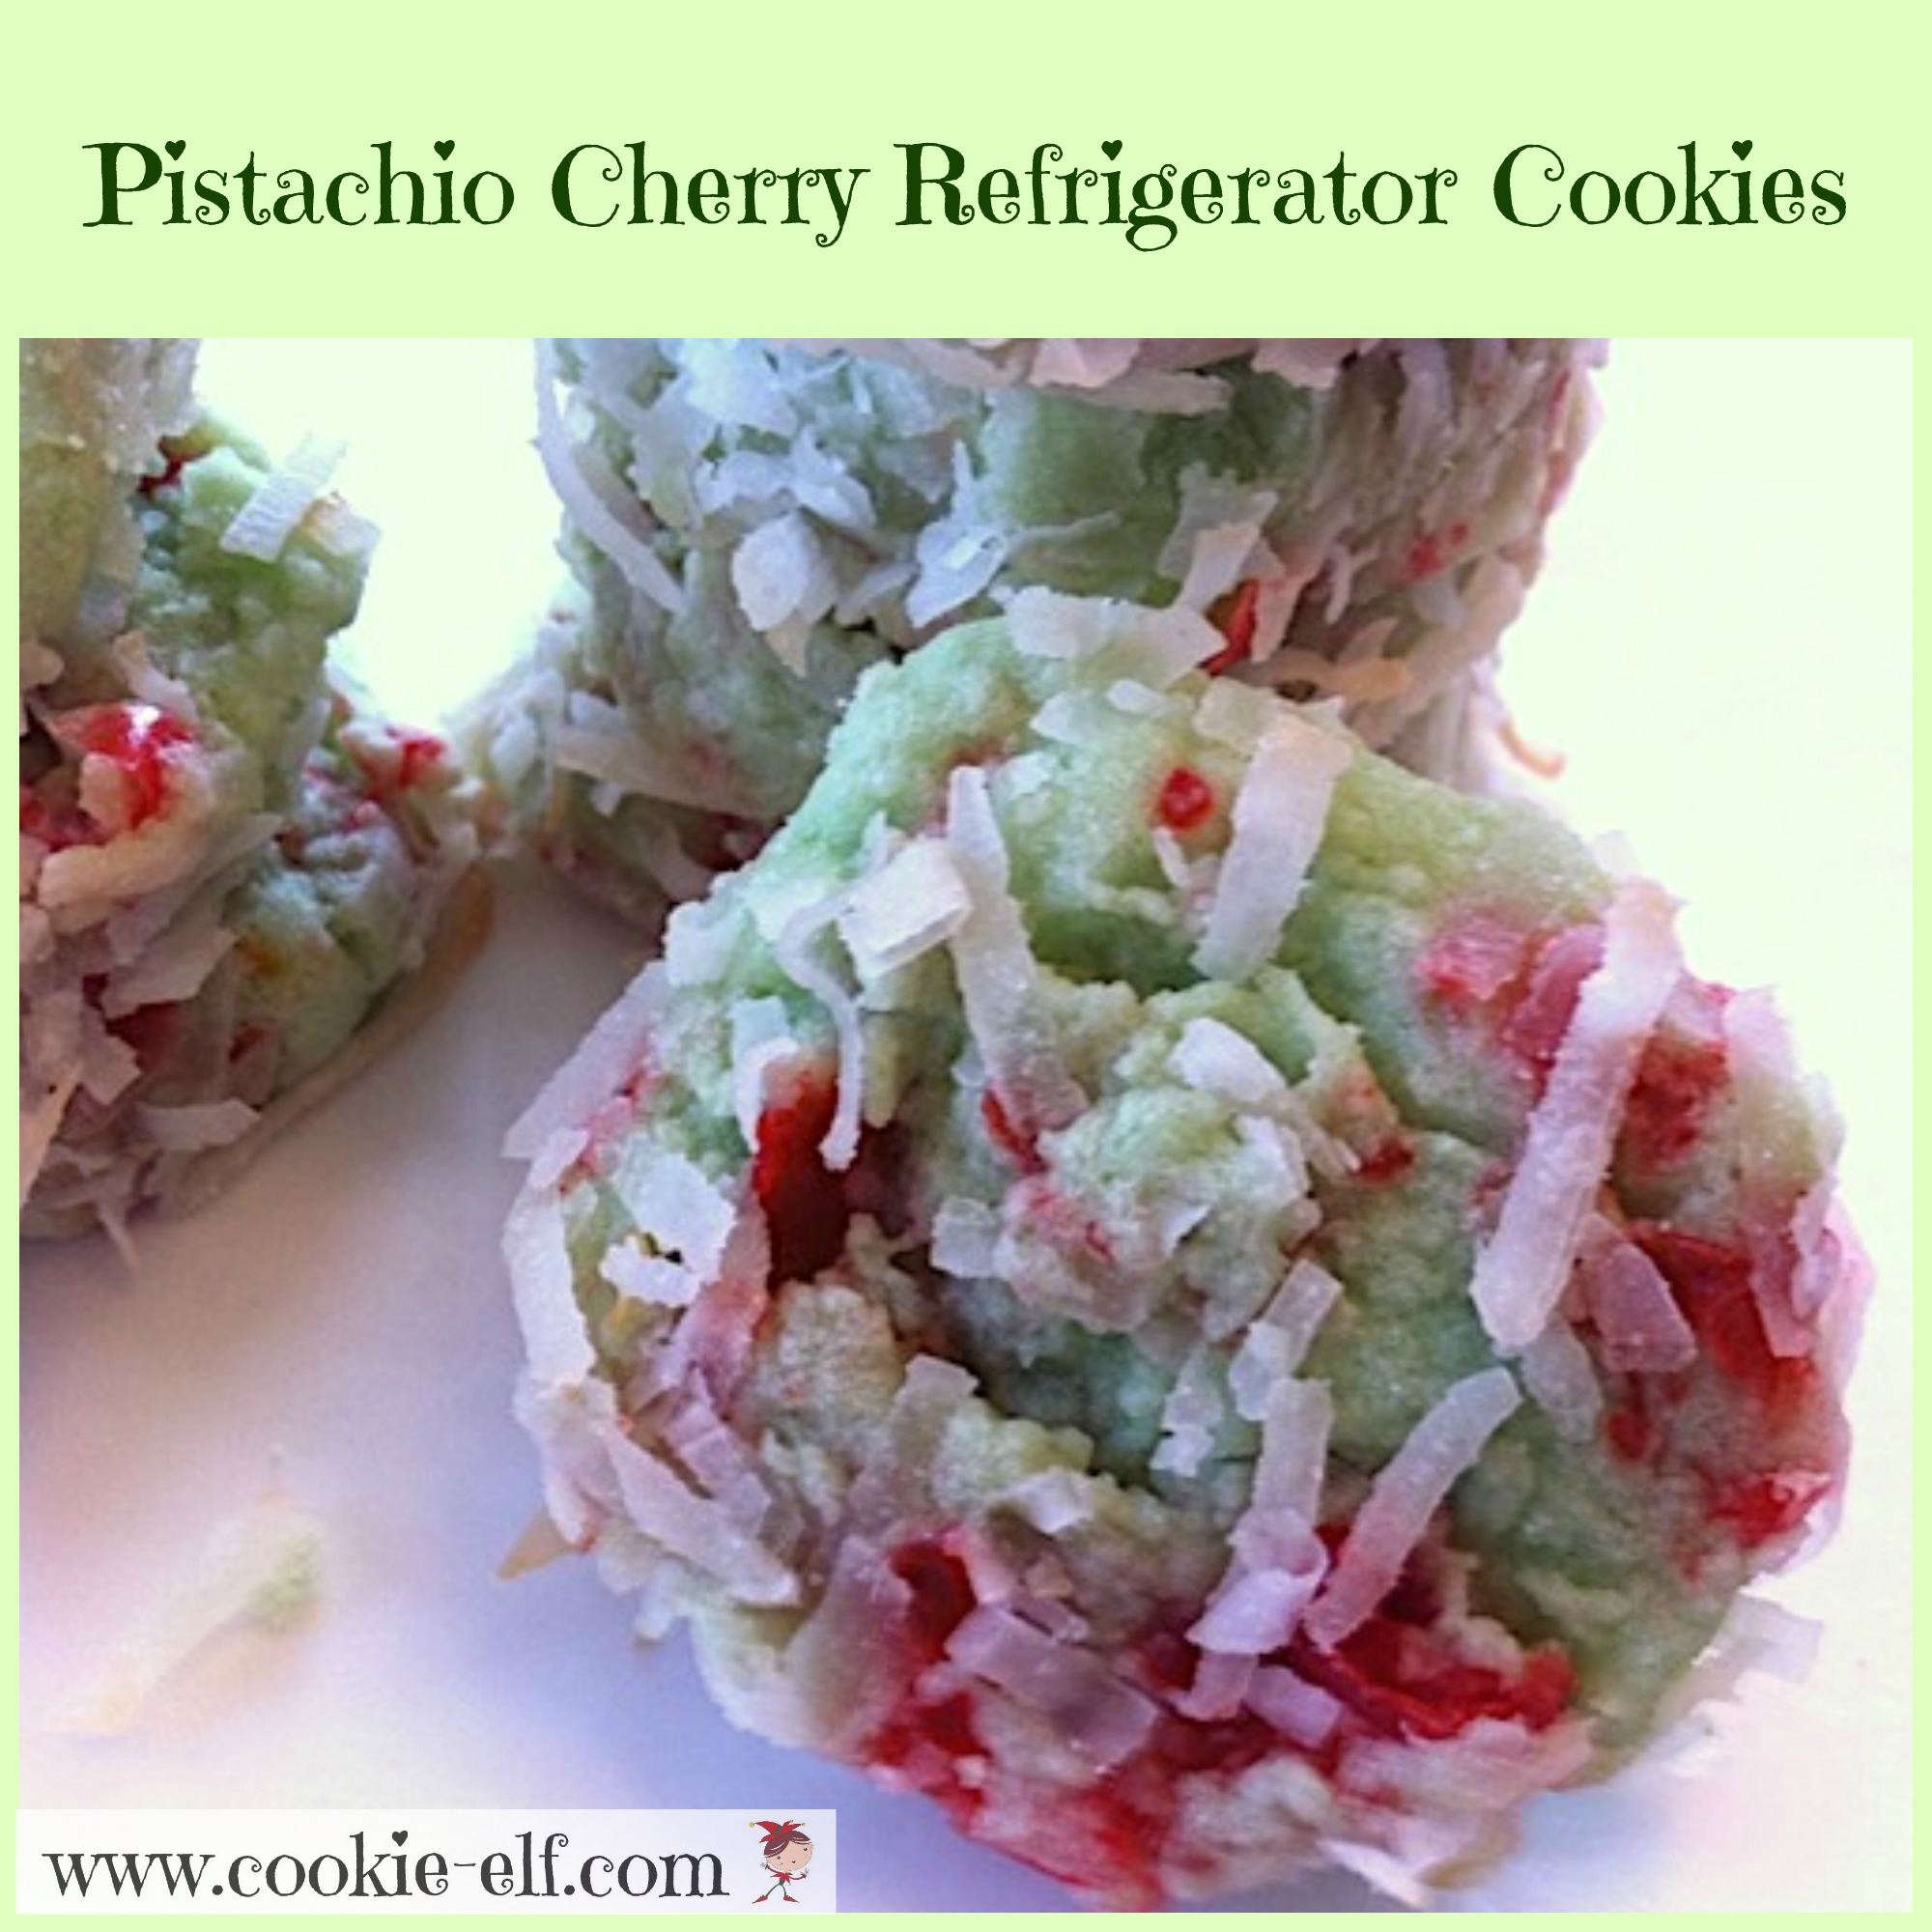 Pistachio Cherry Refrigerator Cookies (Cherry Christmas Refrigerator Cookies) with The Cookie Elf